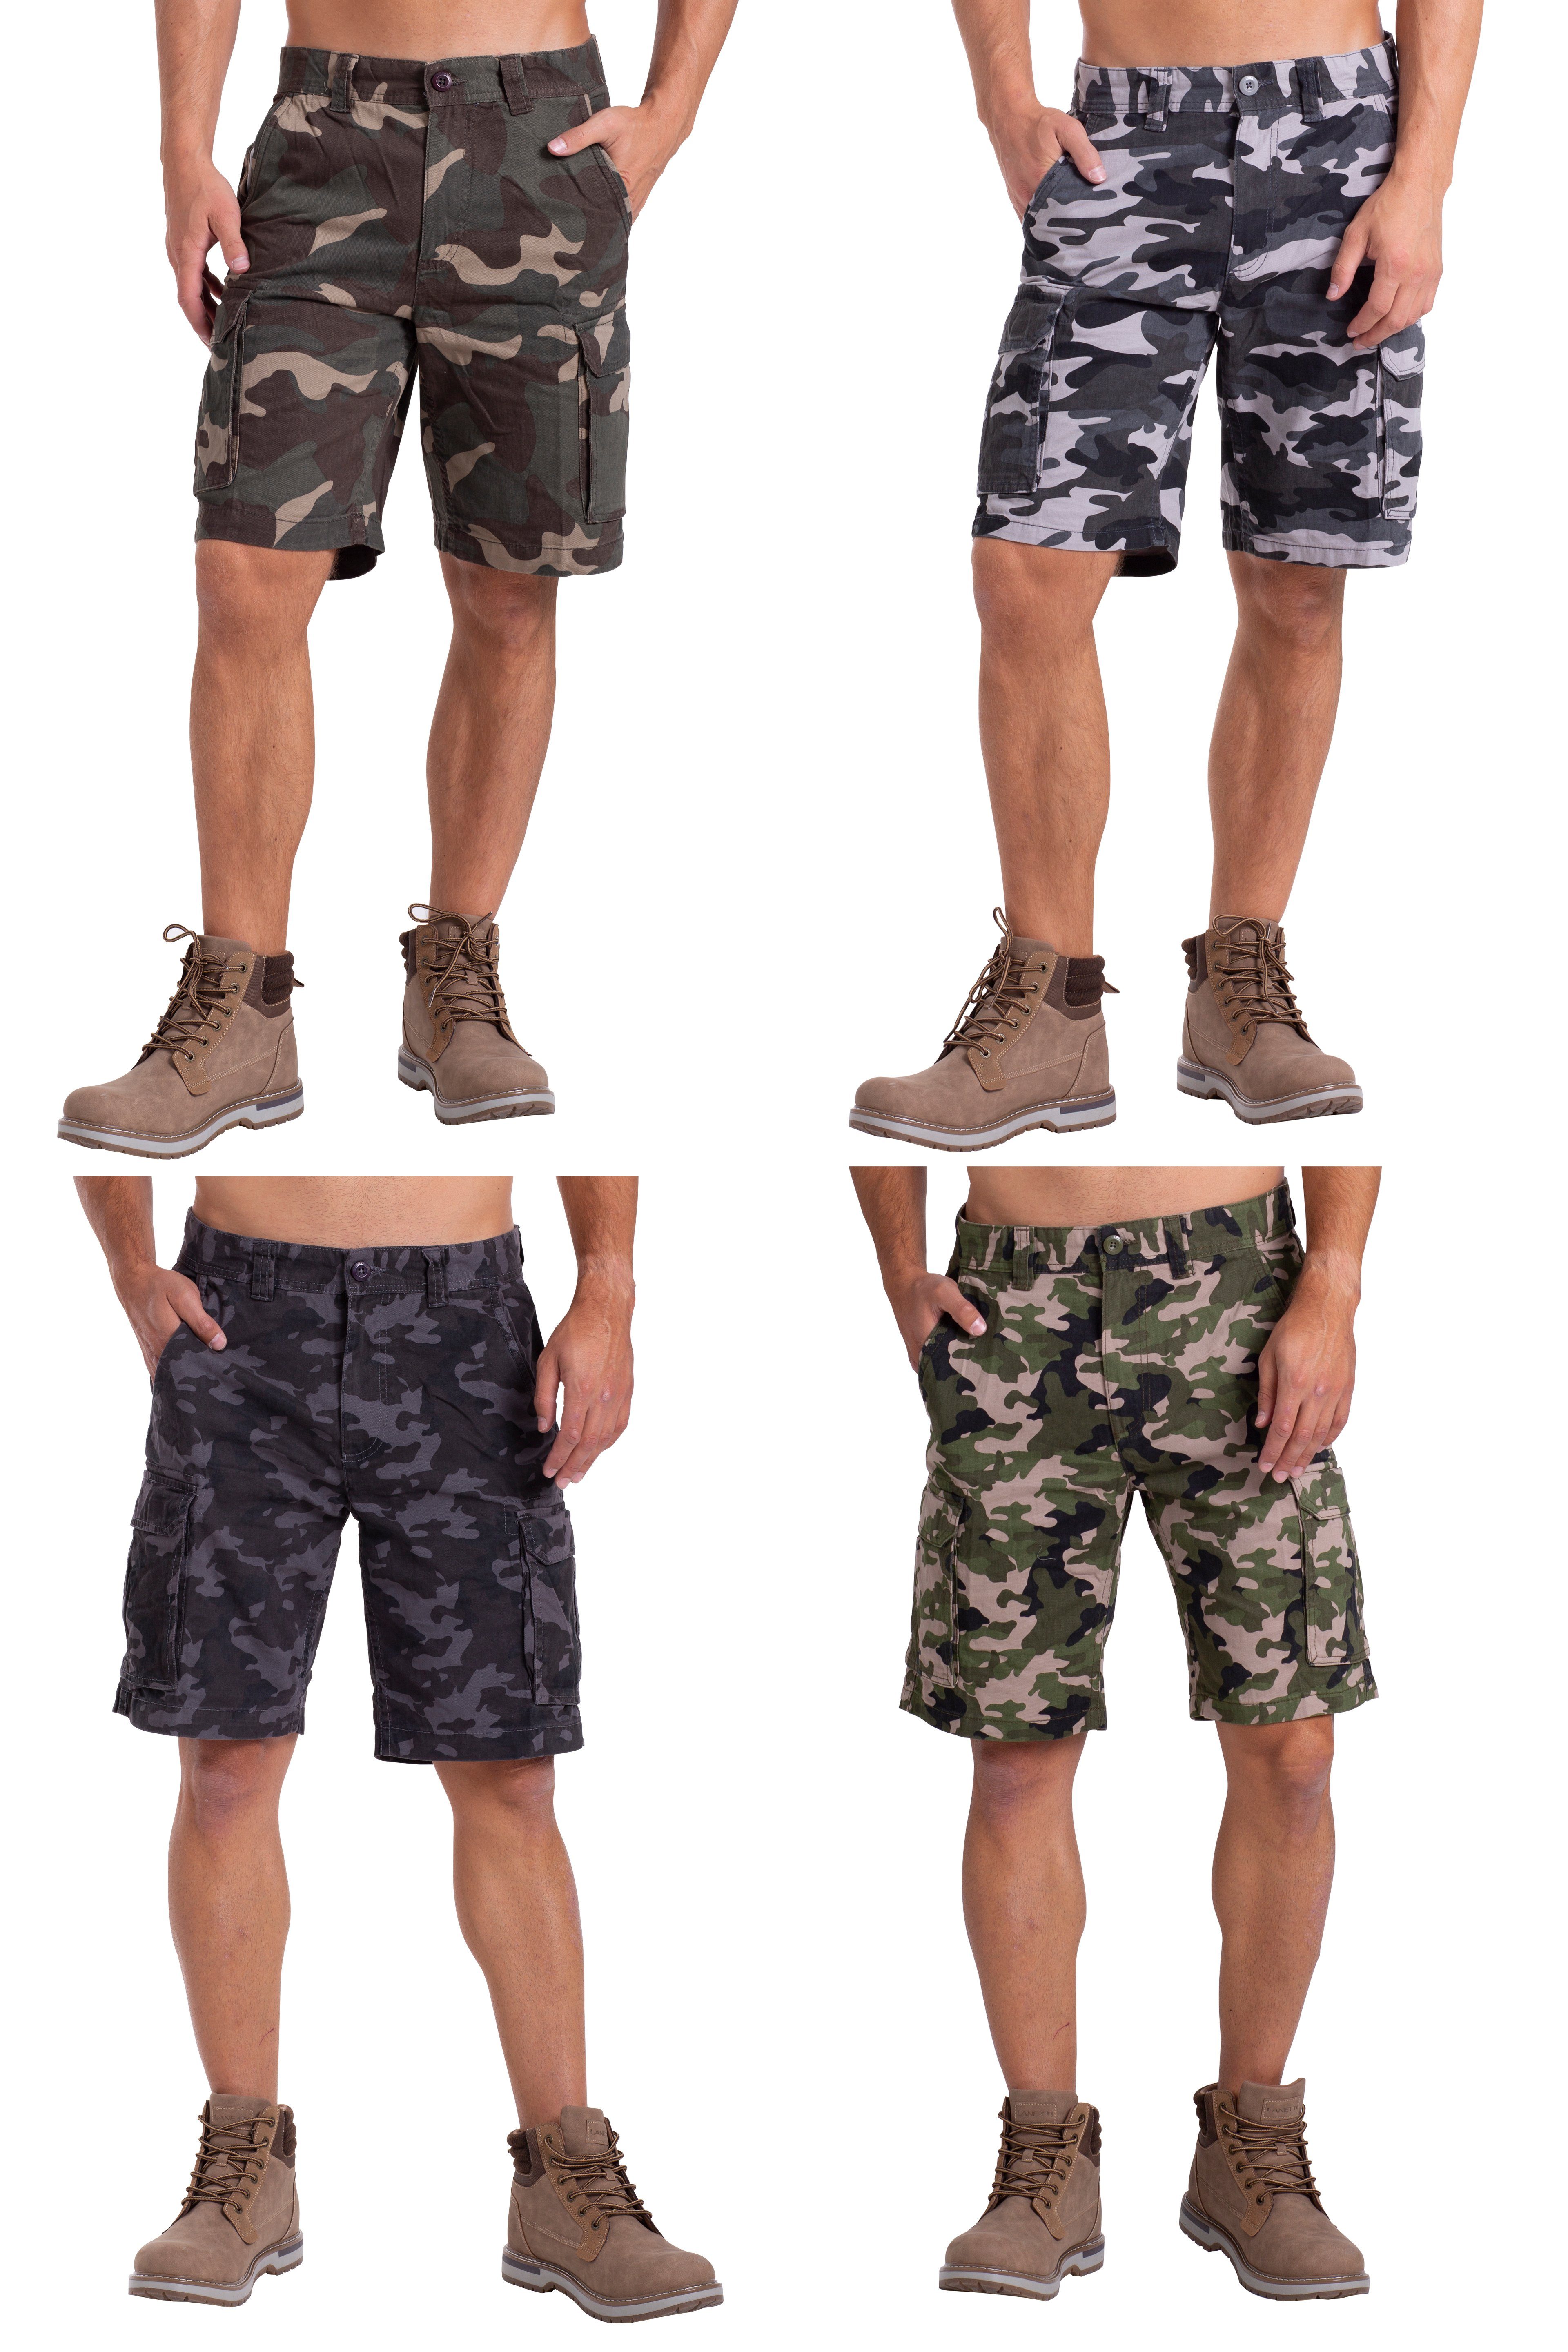 Herren Bermuda Camouflage Shorts Cargo kurze Hose Camouflage Tarnmuster Sommer 